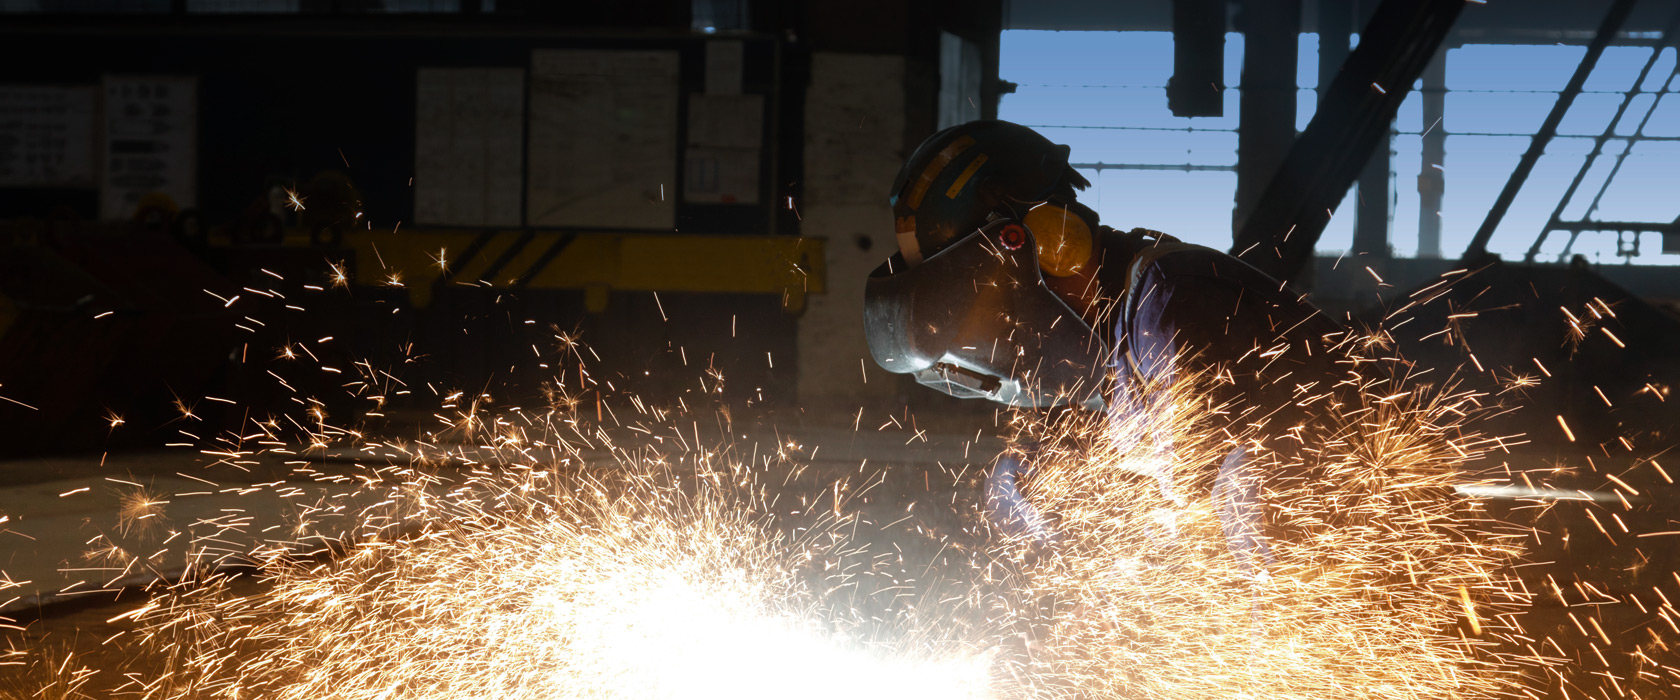 Refractory engineer jobs in steel